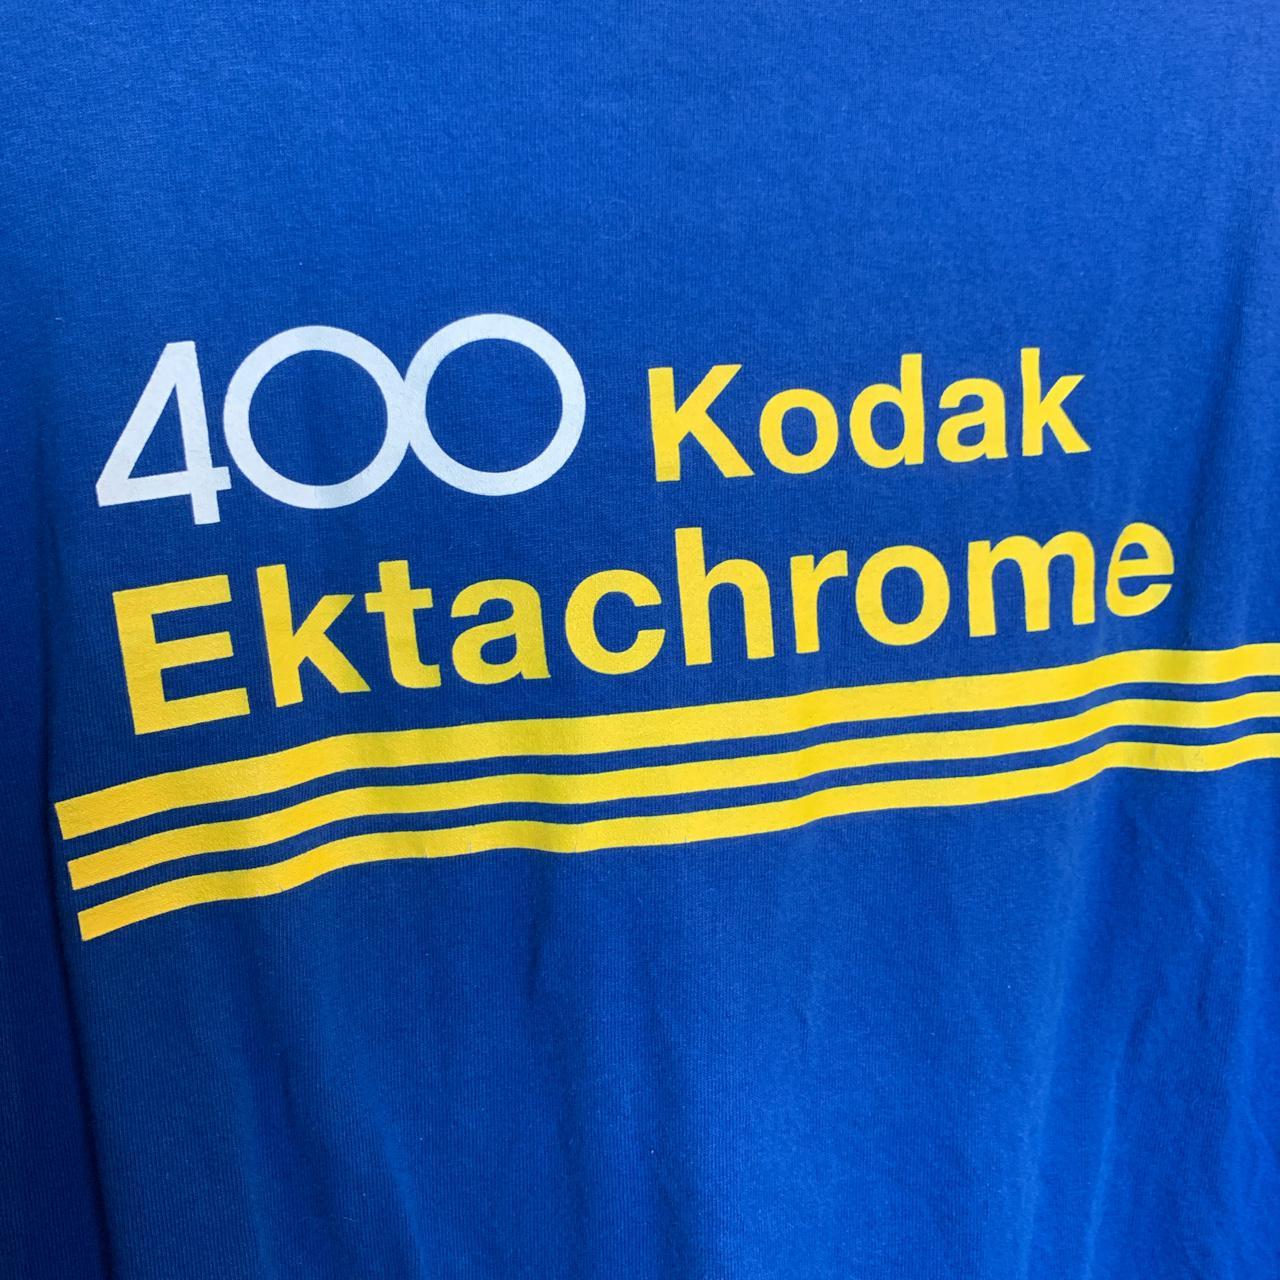 Kodak Men's Yellow and Blue T-shirt (3)